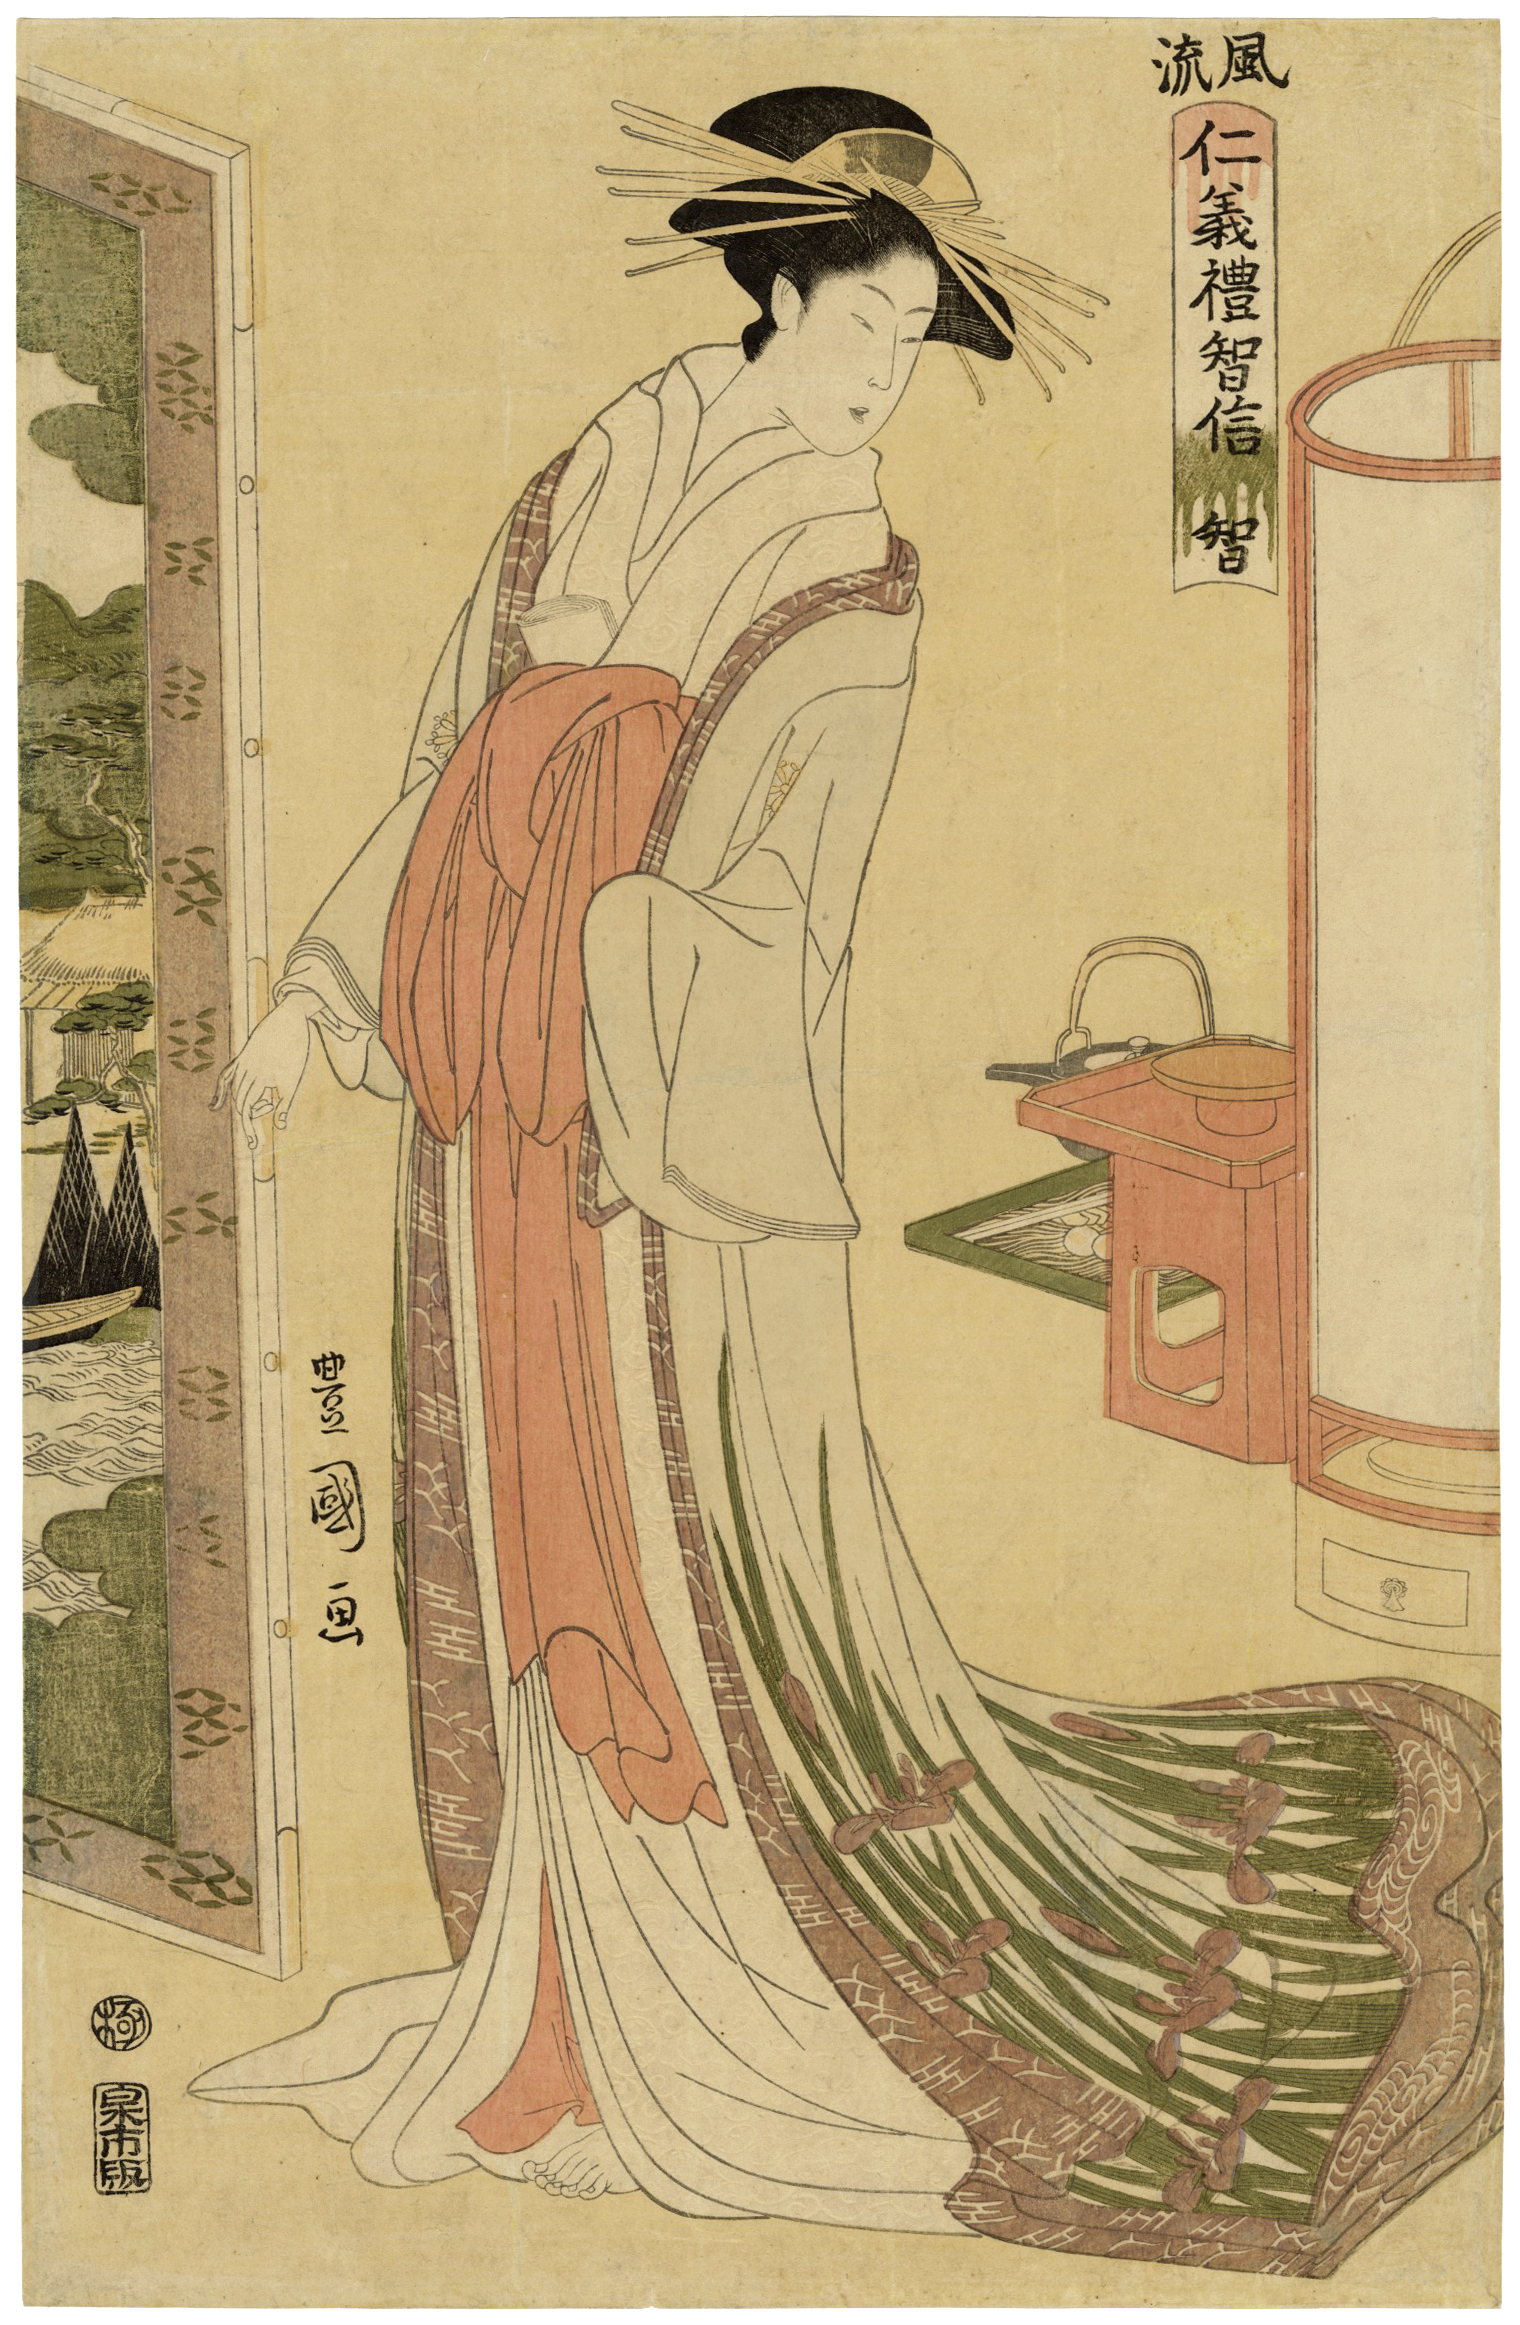 Utagawa Toyokuni I (1769 - 1825), 'Wisdom', from the series 'Fashionable Five Virtues', 1795, 38.7 x 25.4 cm.